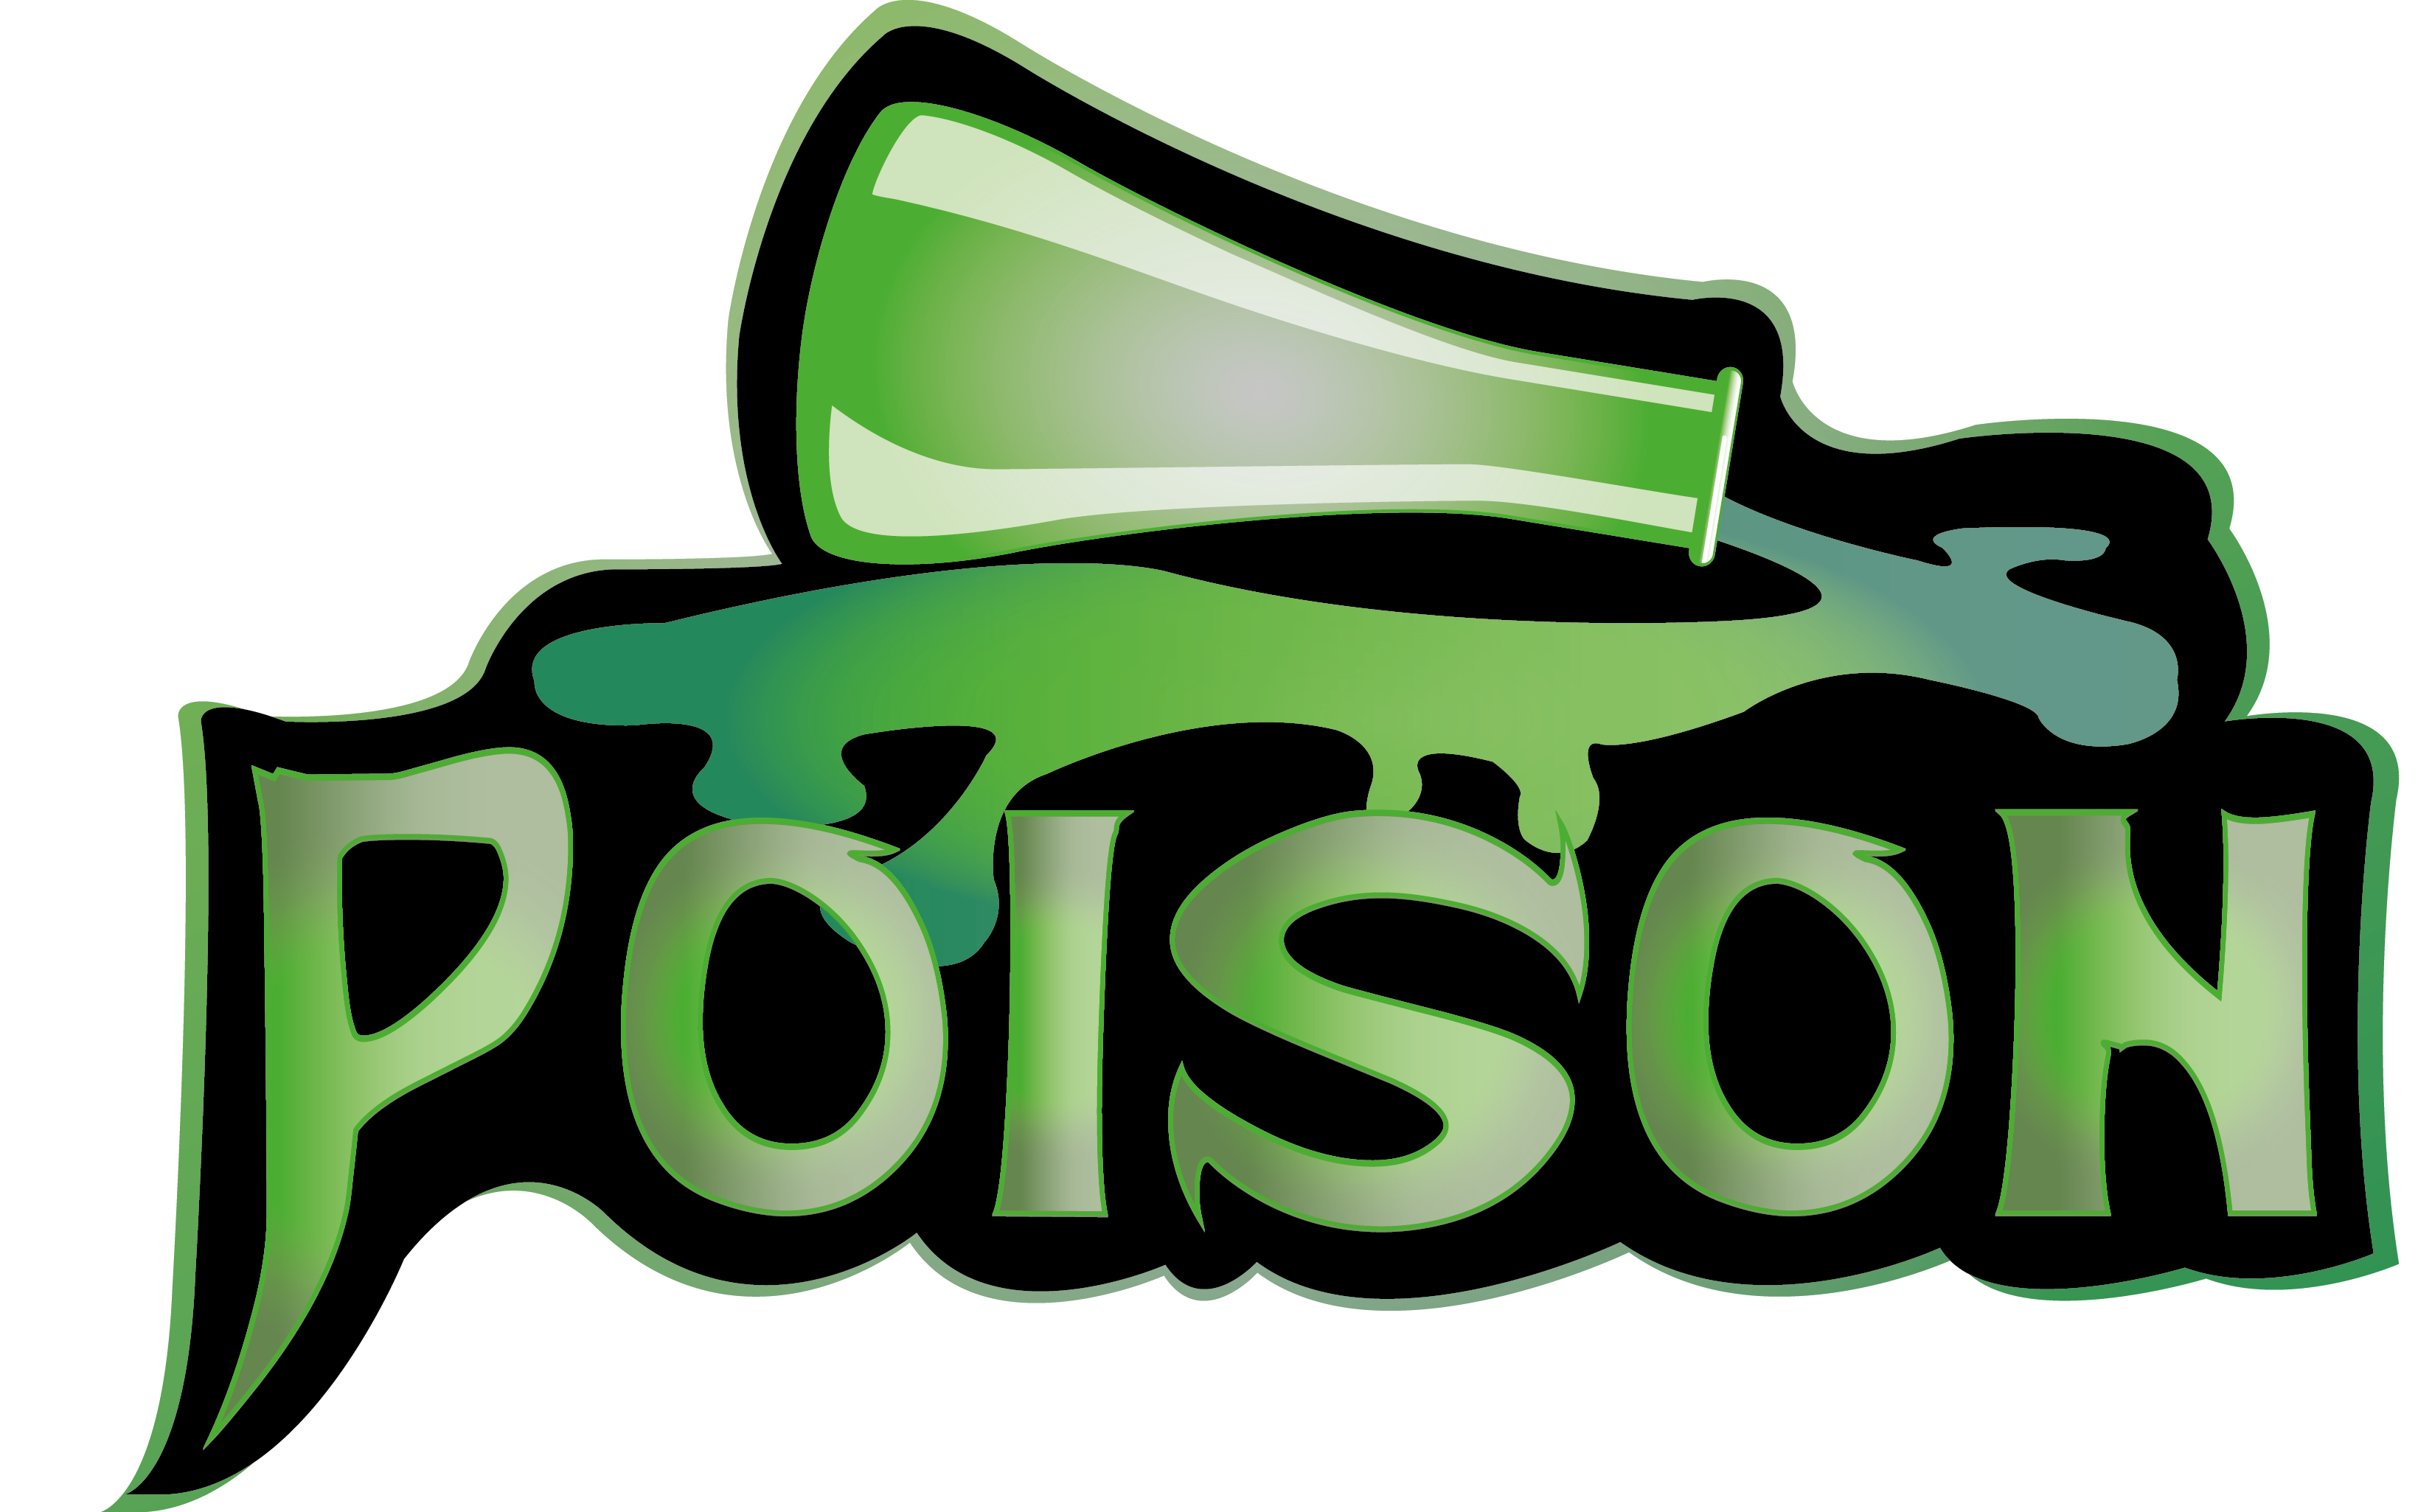 Poison #16